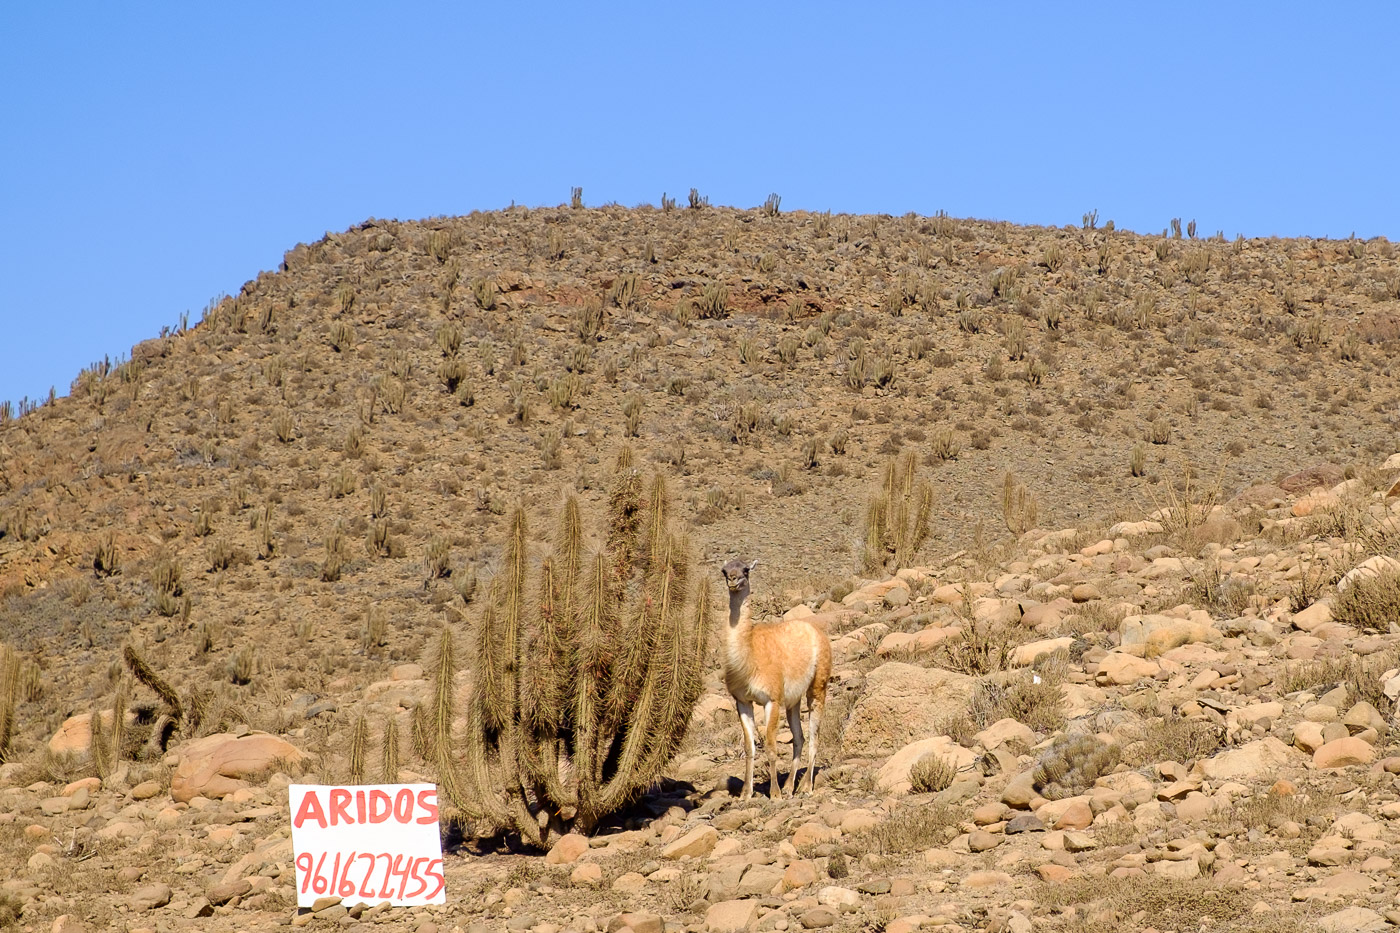 Aridos - Guanaco in the desert